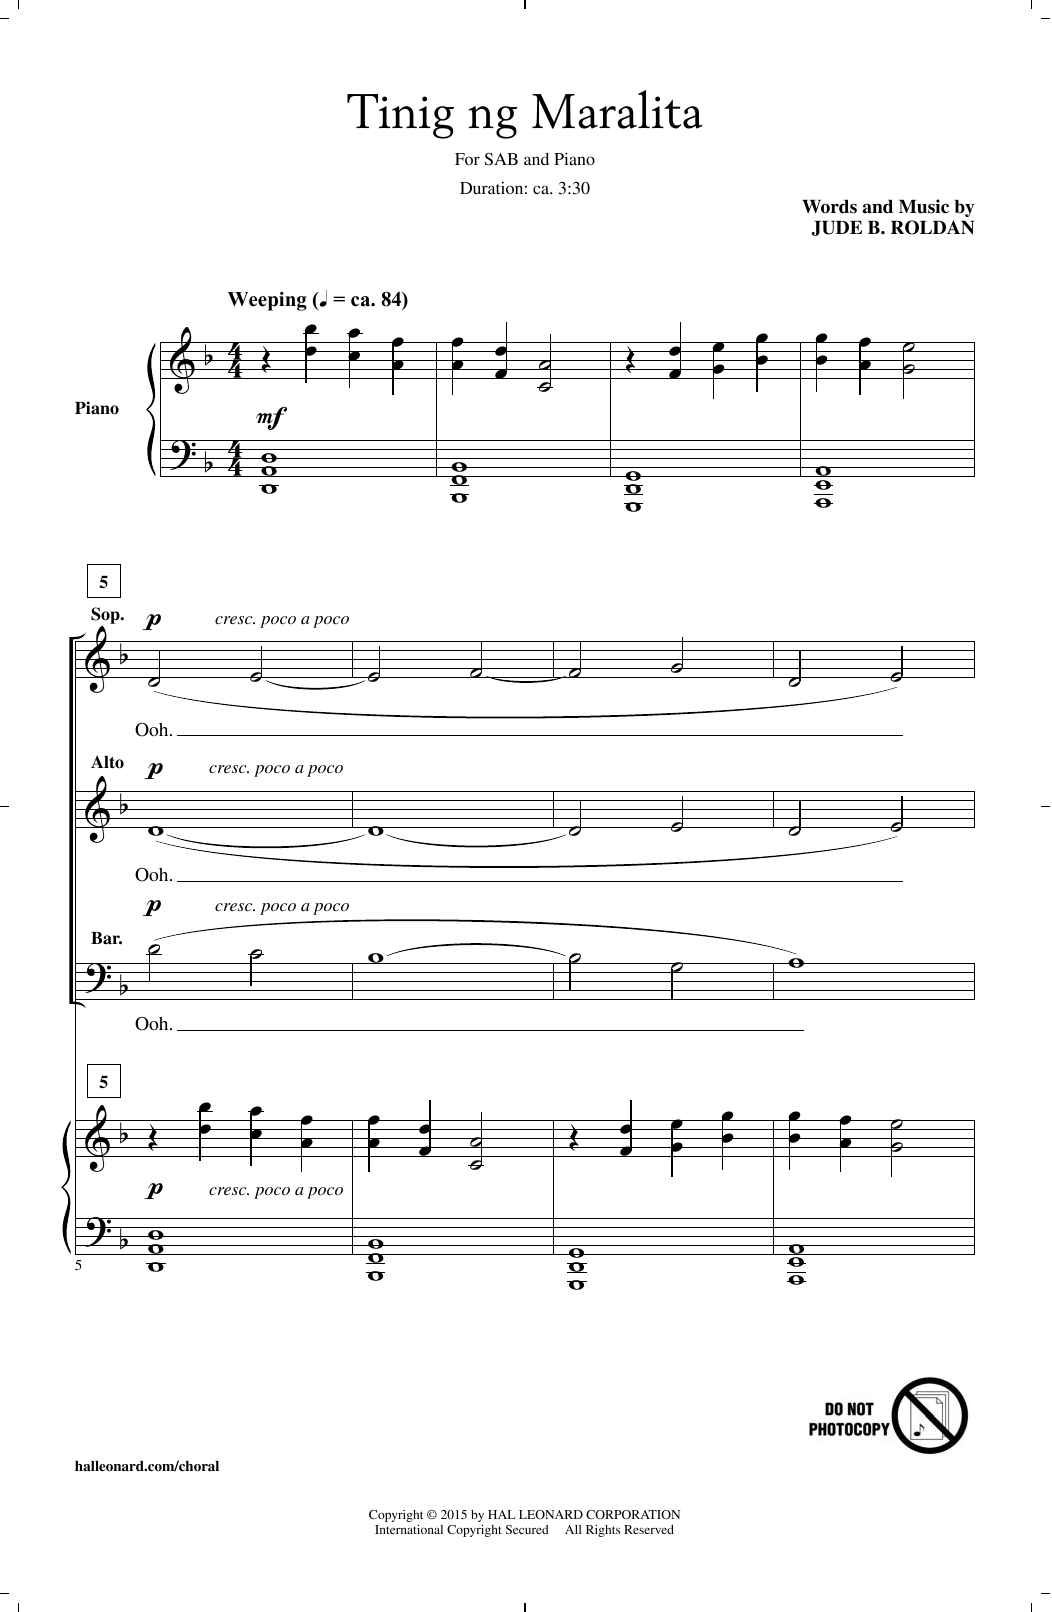 Download Jude Roldan Tinig Ng Maralita Sheet Music and learn how to play SAB PDF digital score in minutes